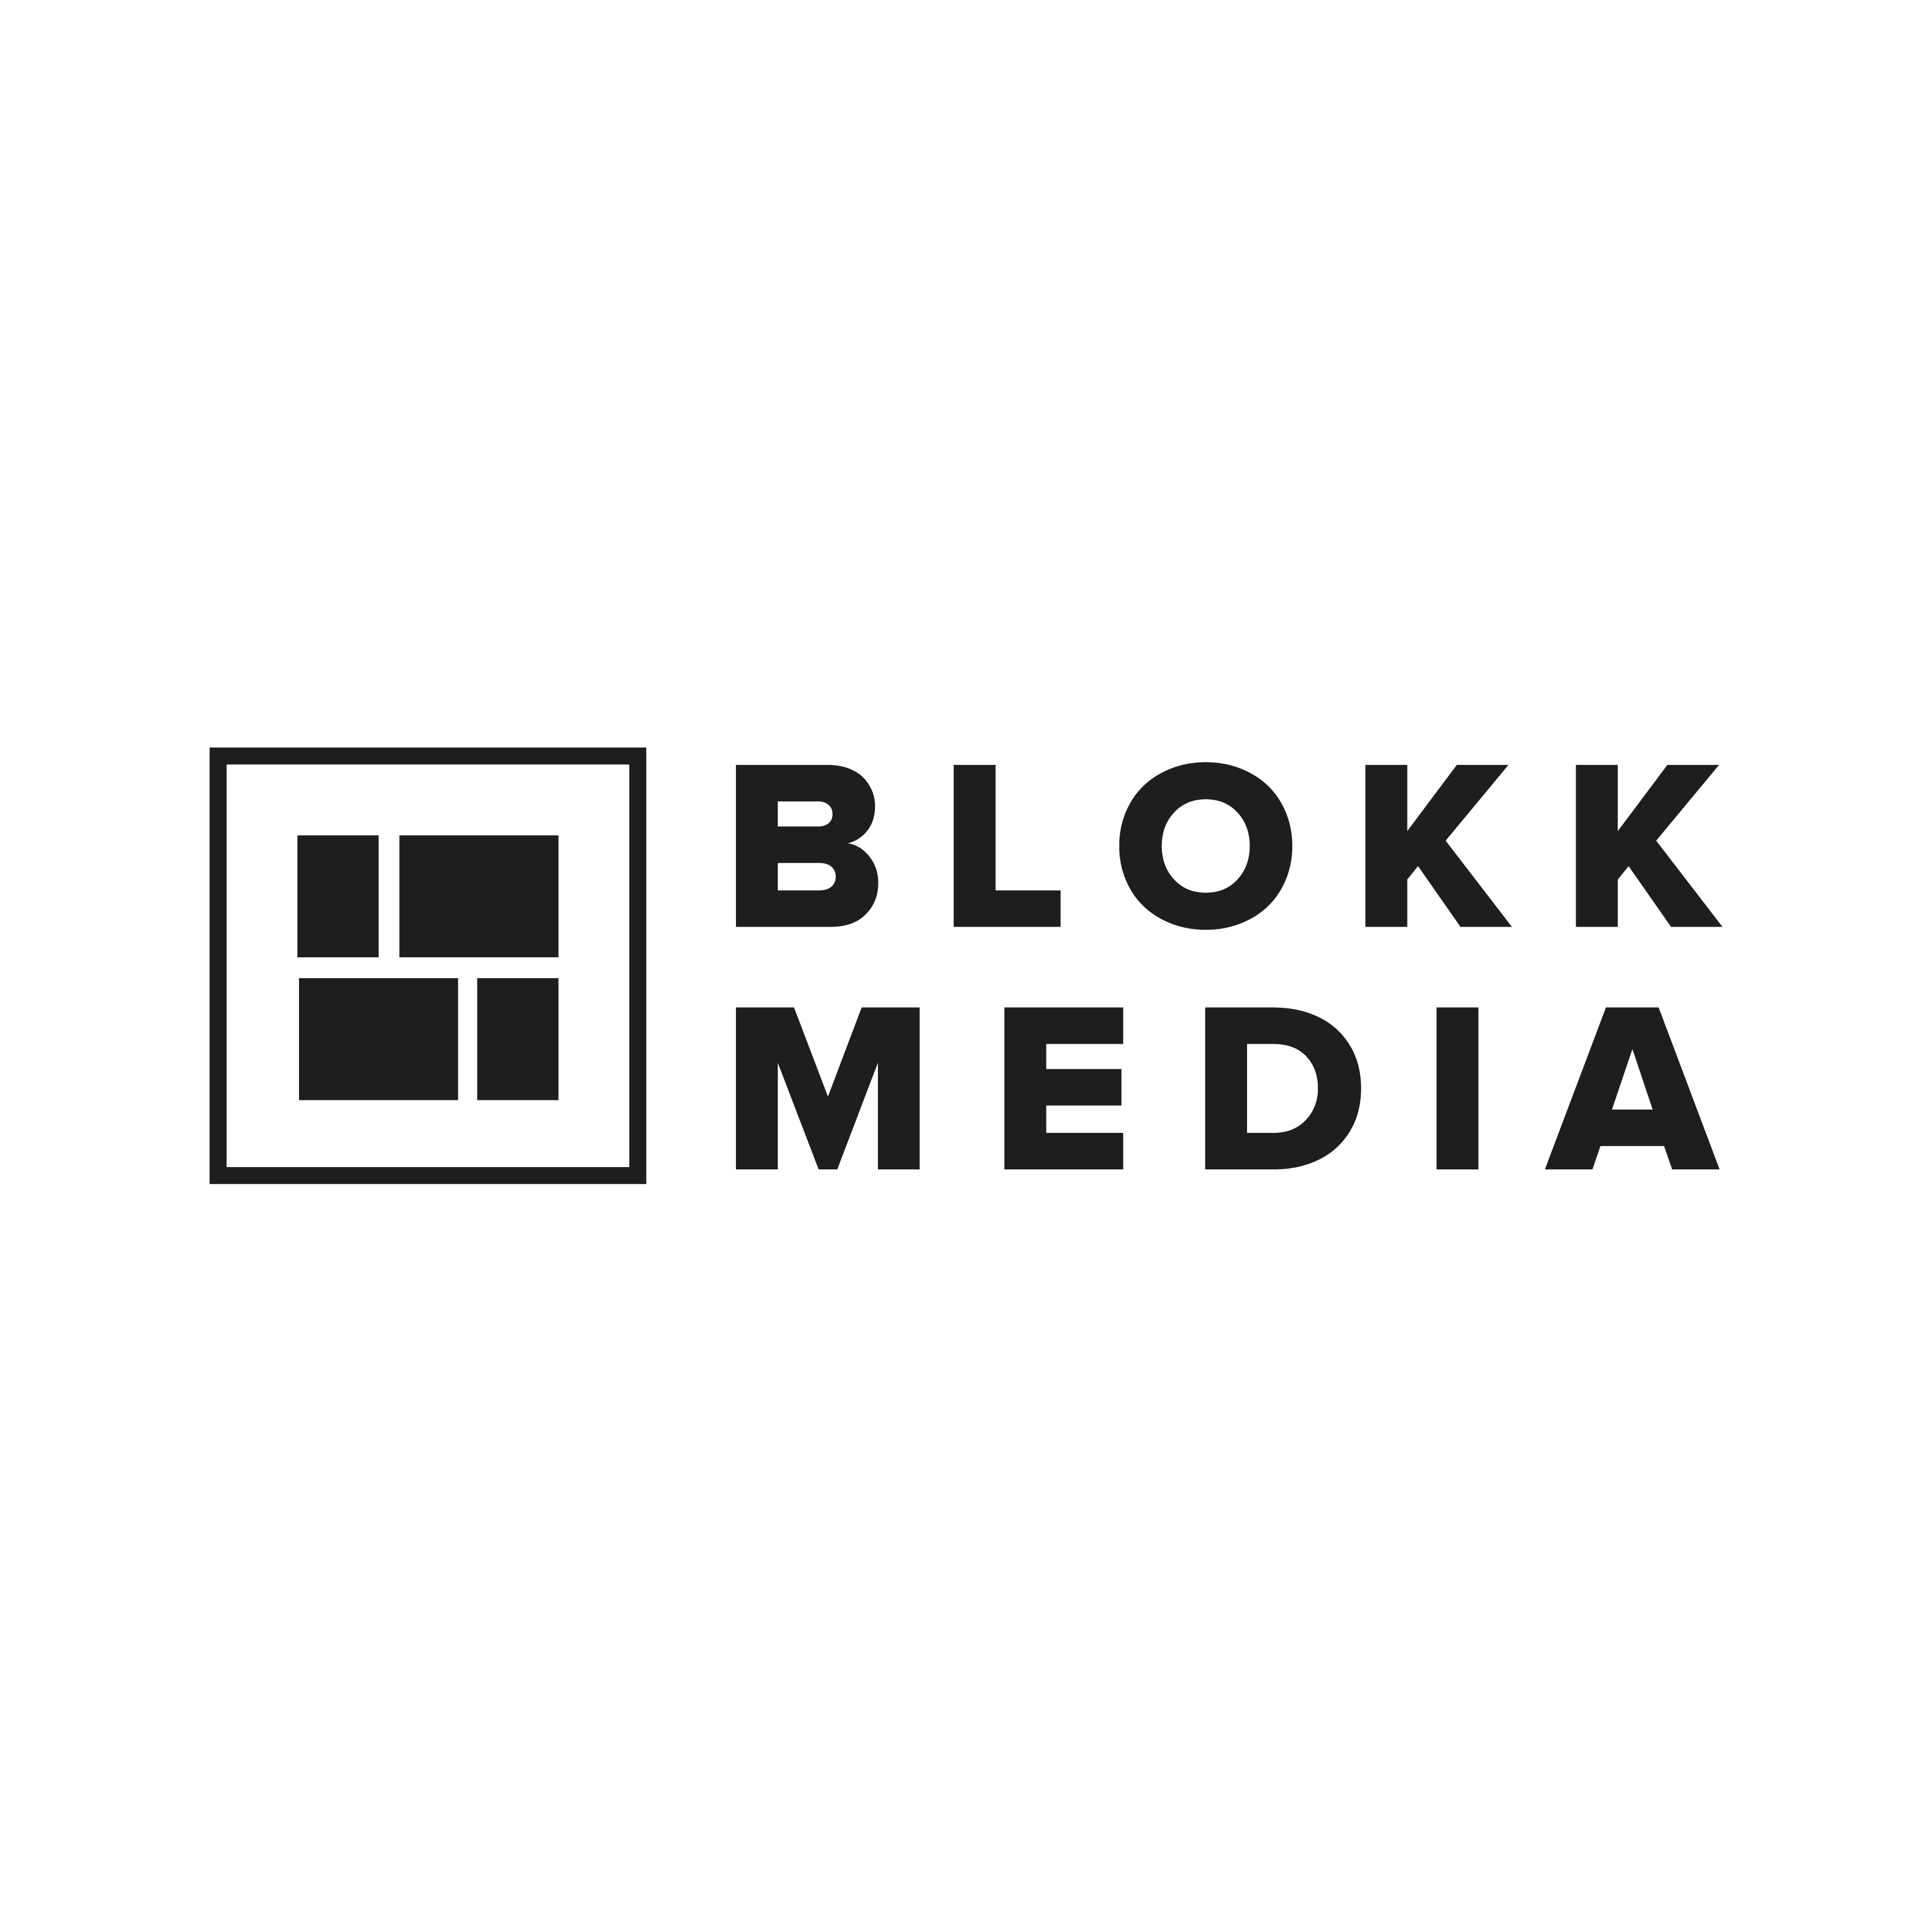 Blokk Media